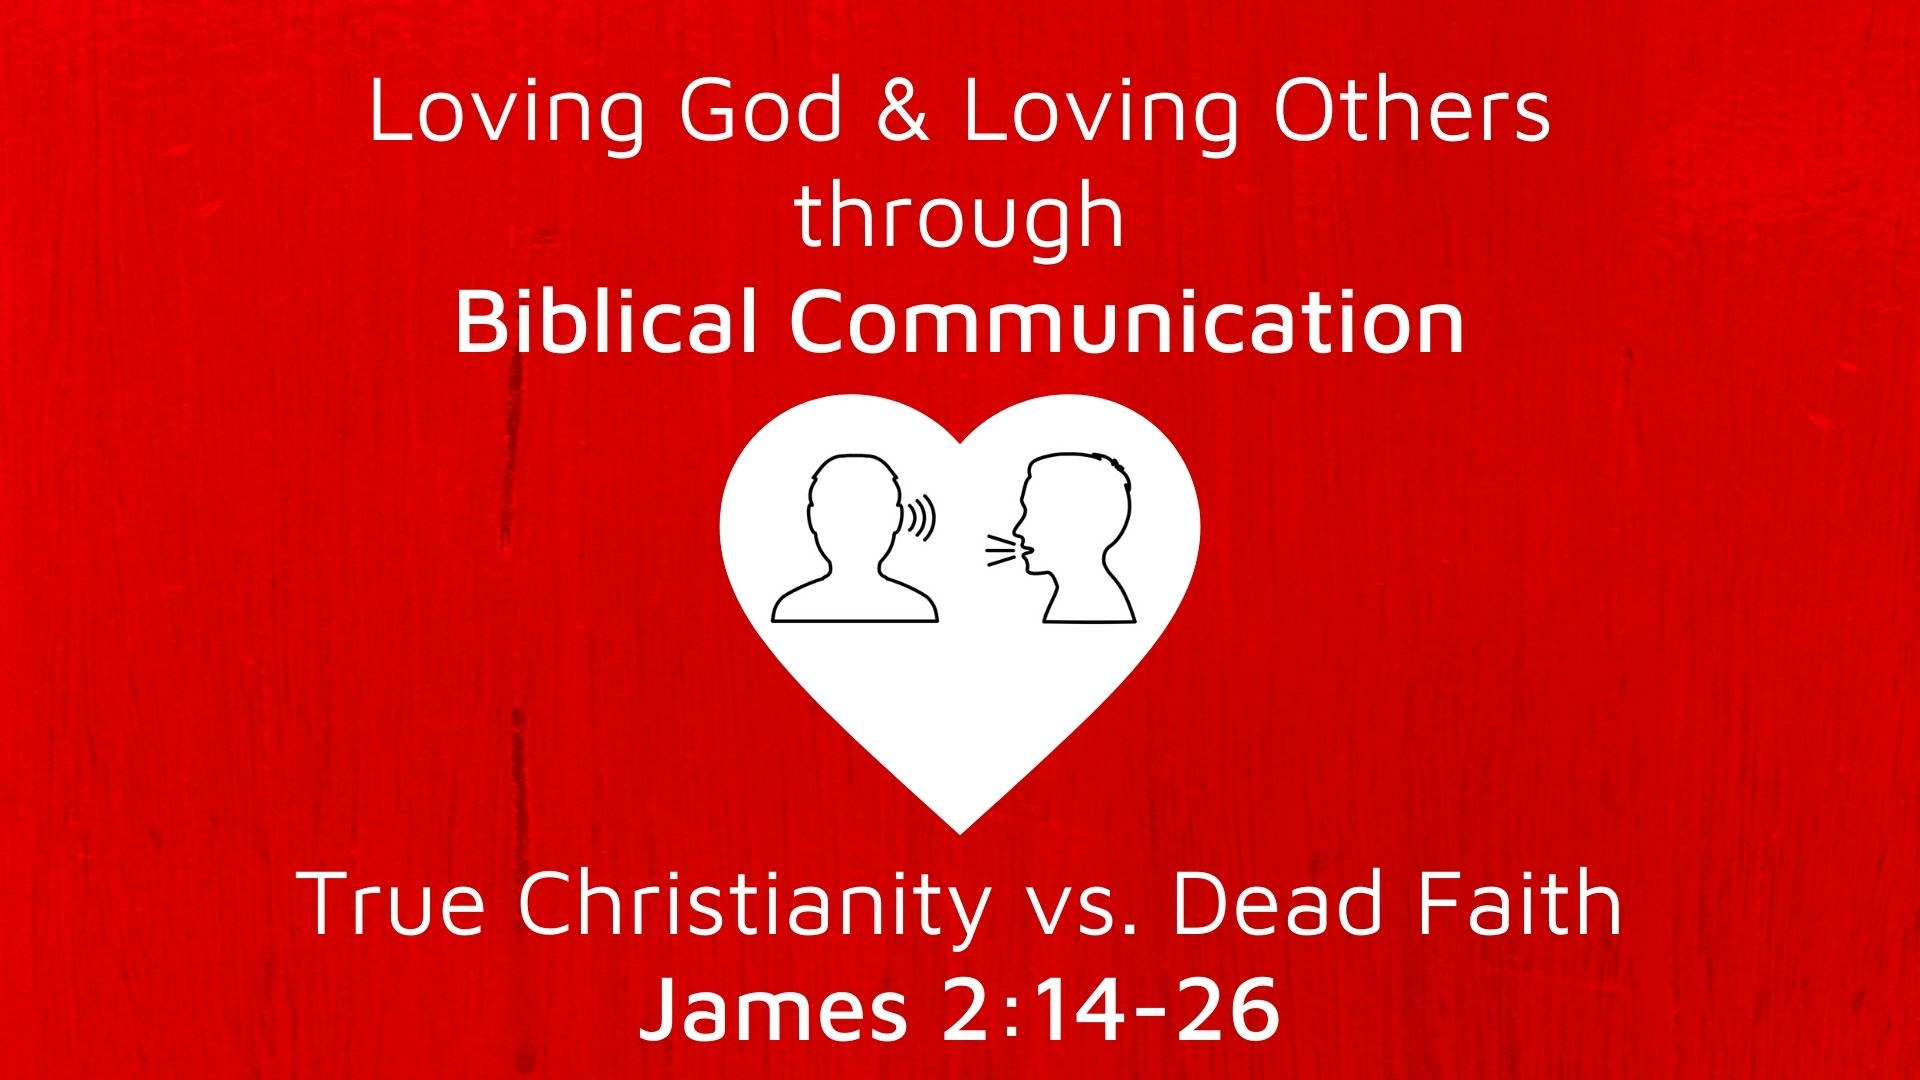 True Christianity vs. Dead Faith Image